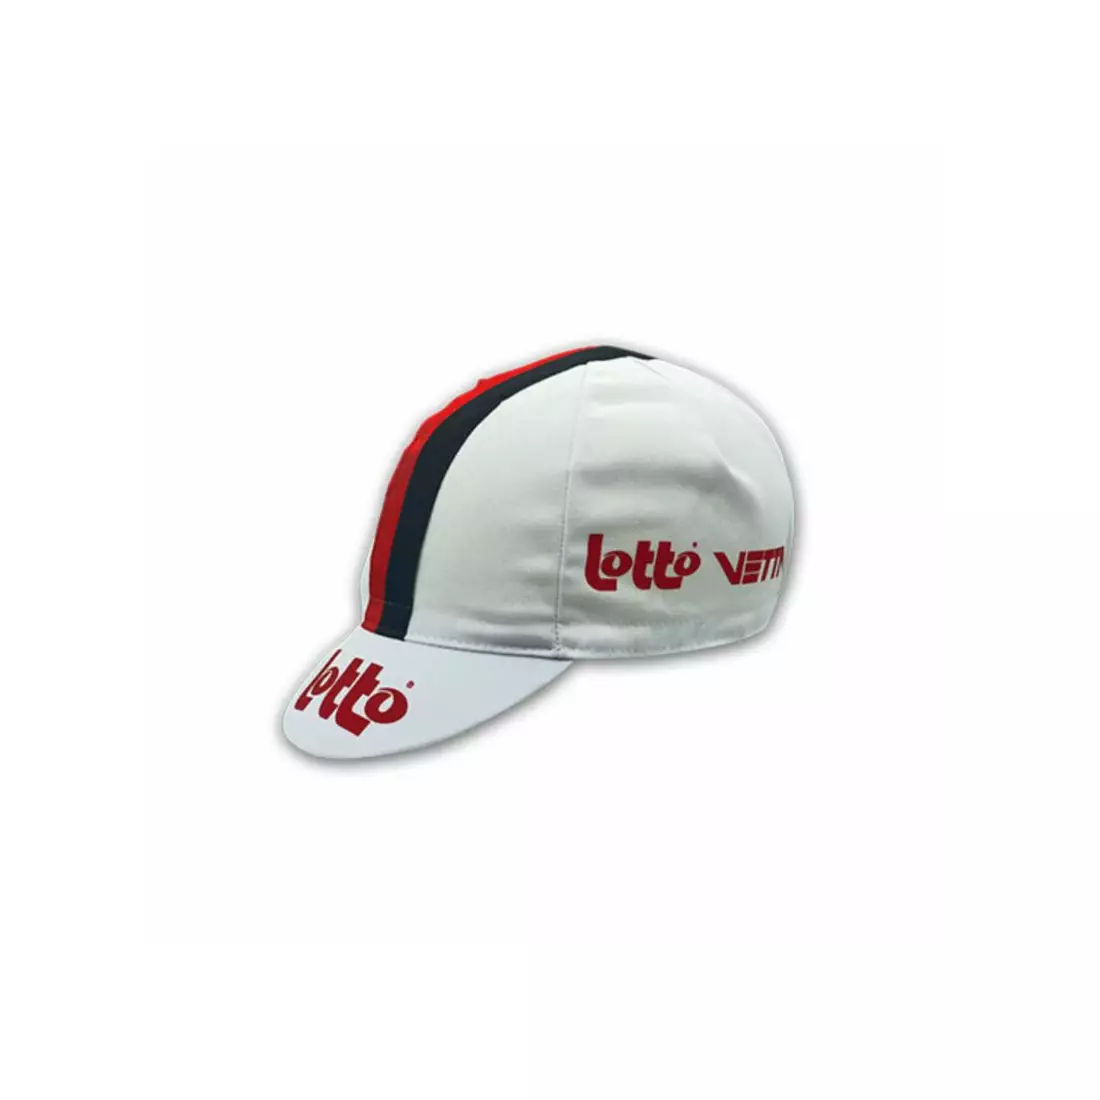 APIS PROFI LOTTO VETTA cycling cap with visor